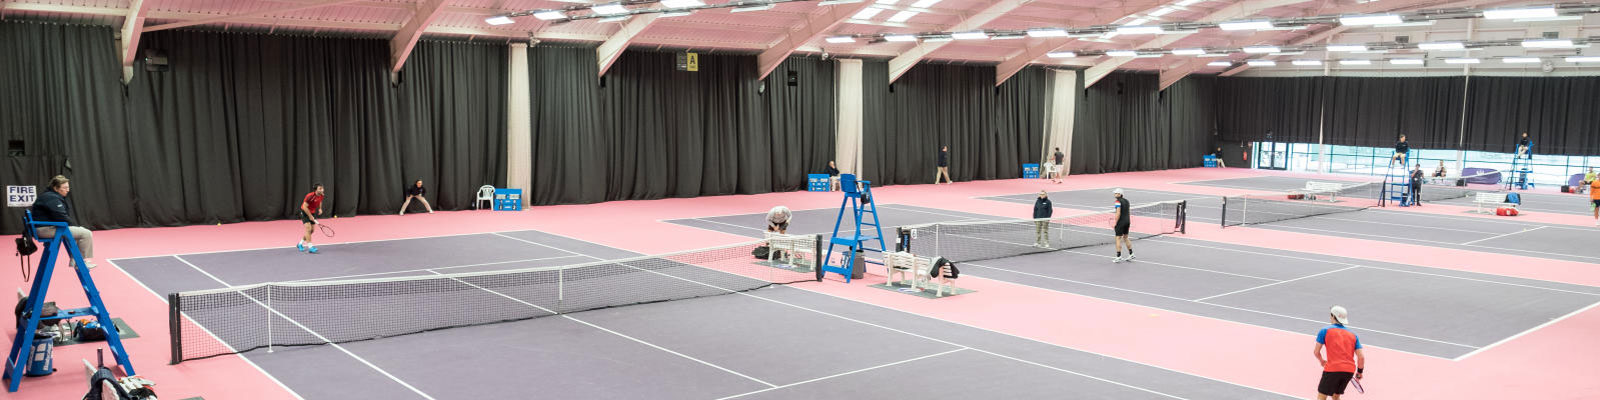 the Tennis Centre at Loughborough University